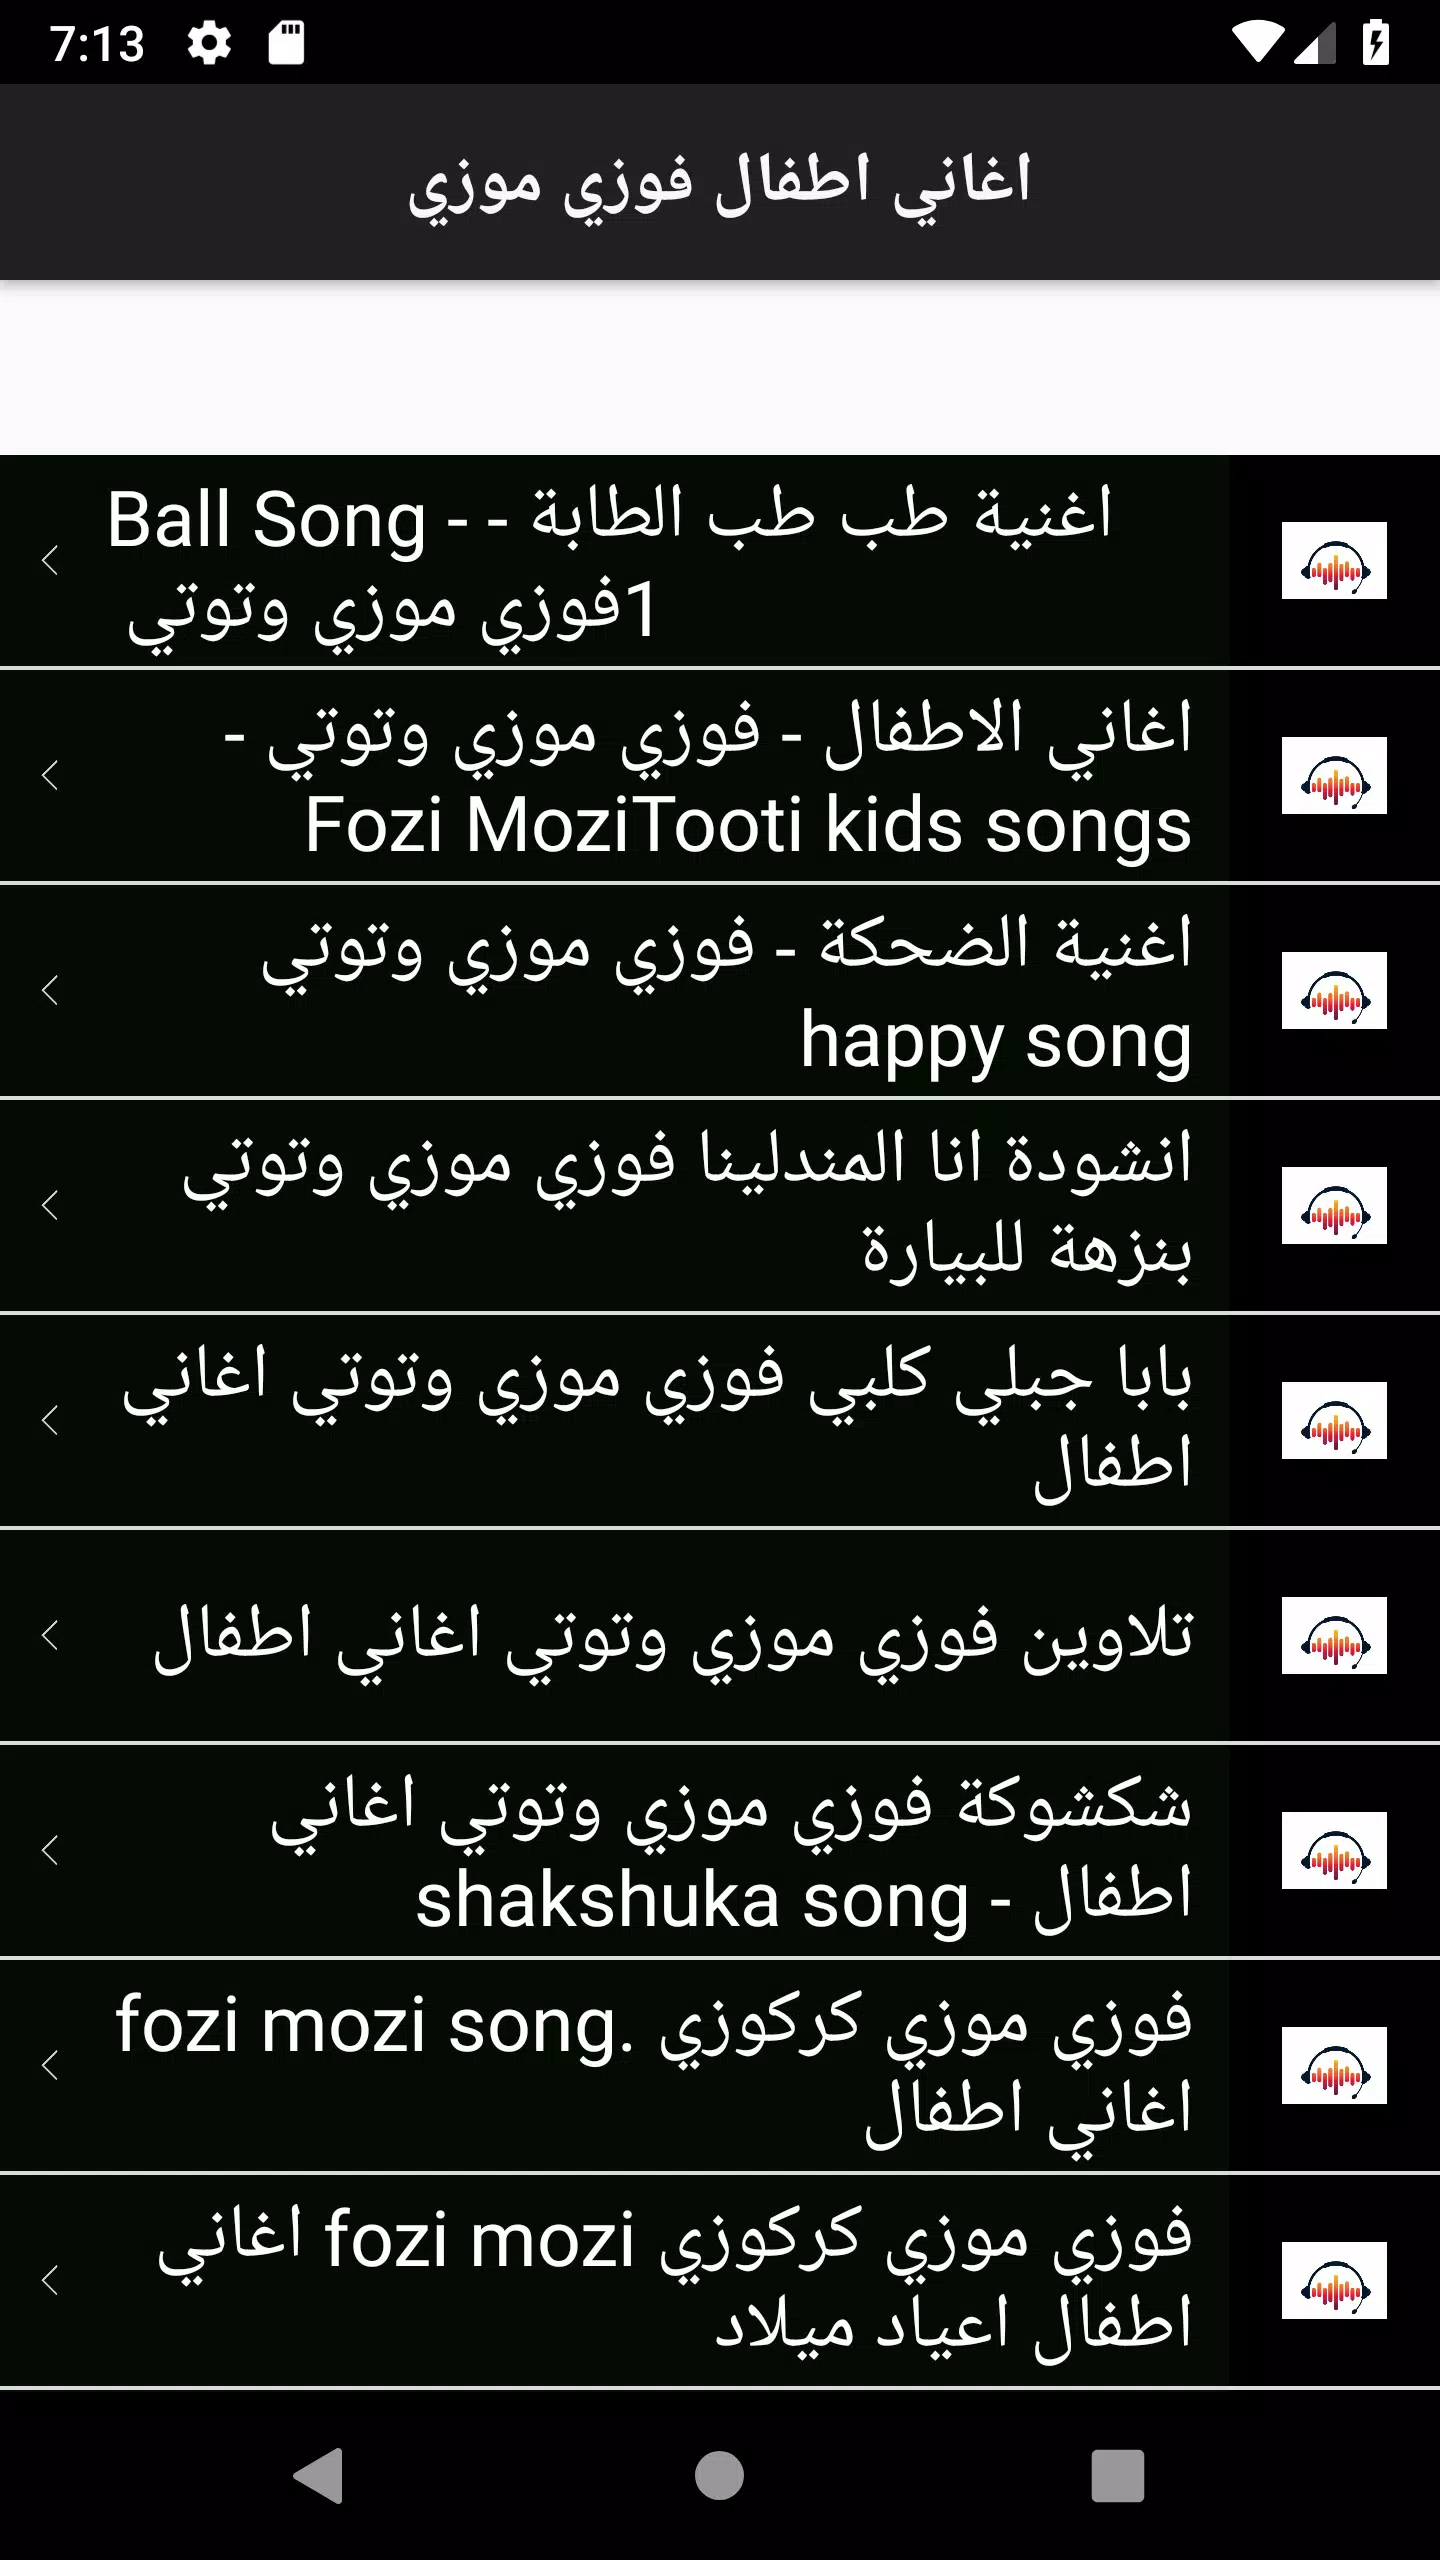 تيتا فوزية - اغاني اطفال for Android - APK Download